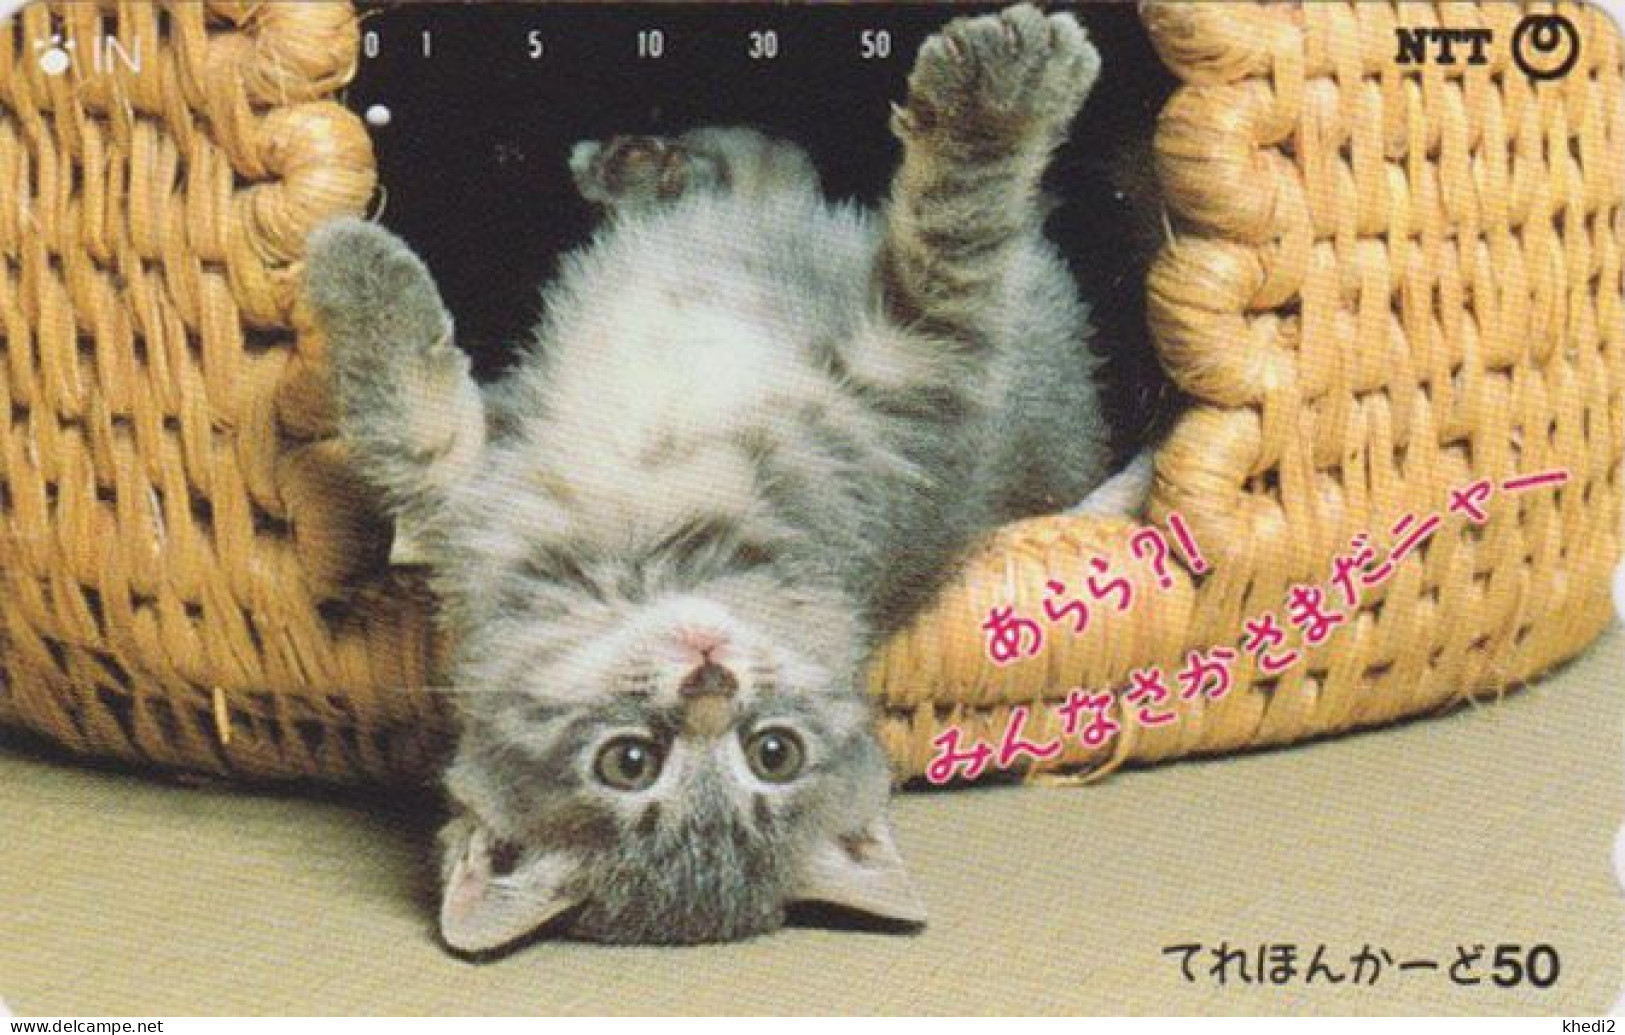 Télécarte JAPON / NTT 251-001 B ** 2 NOTCHES 1 PUNCH ** - ANIMAL CHAT - CAT JAPAN Phonecard - Cats